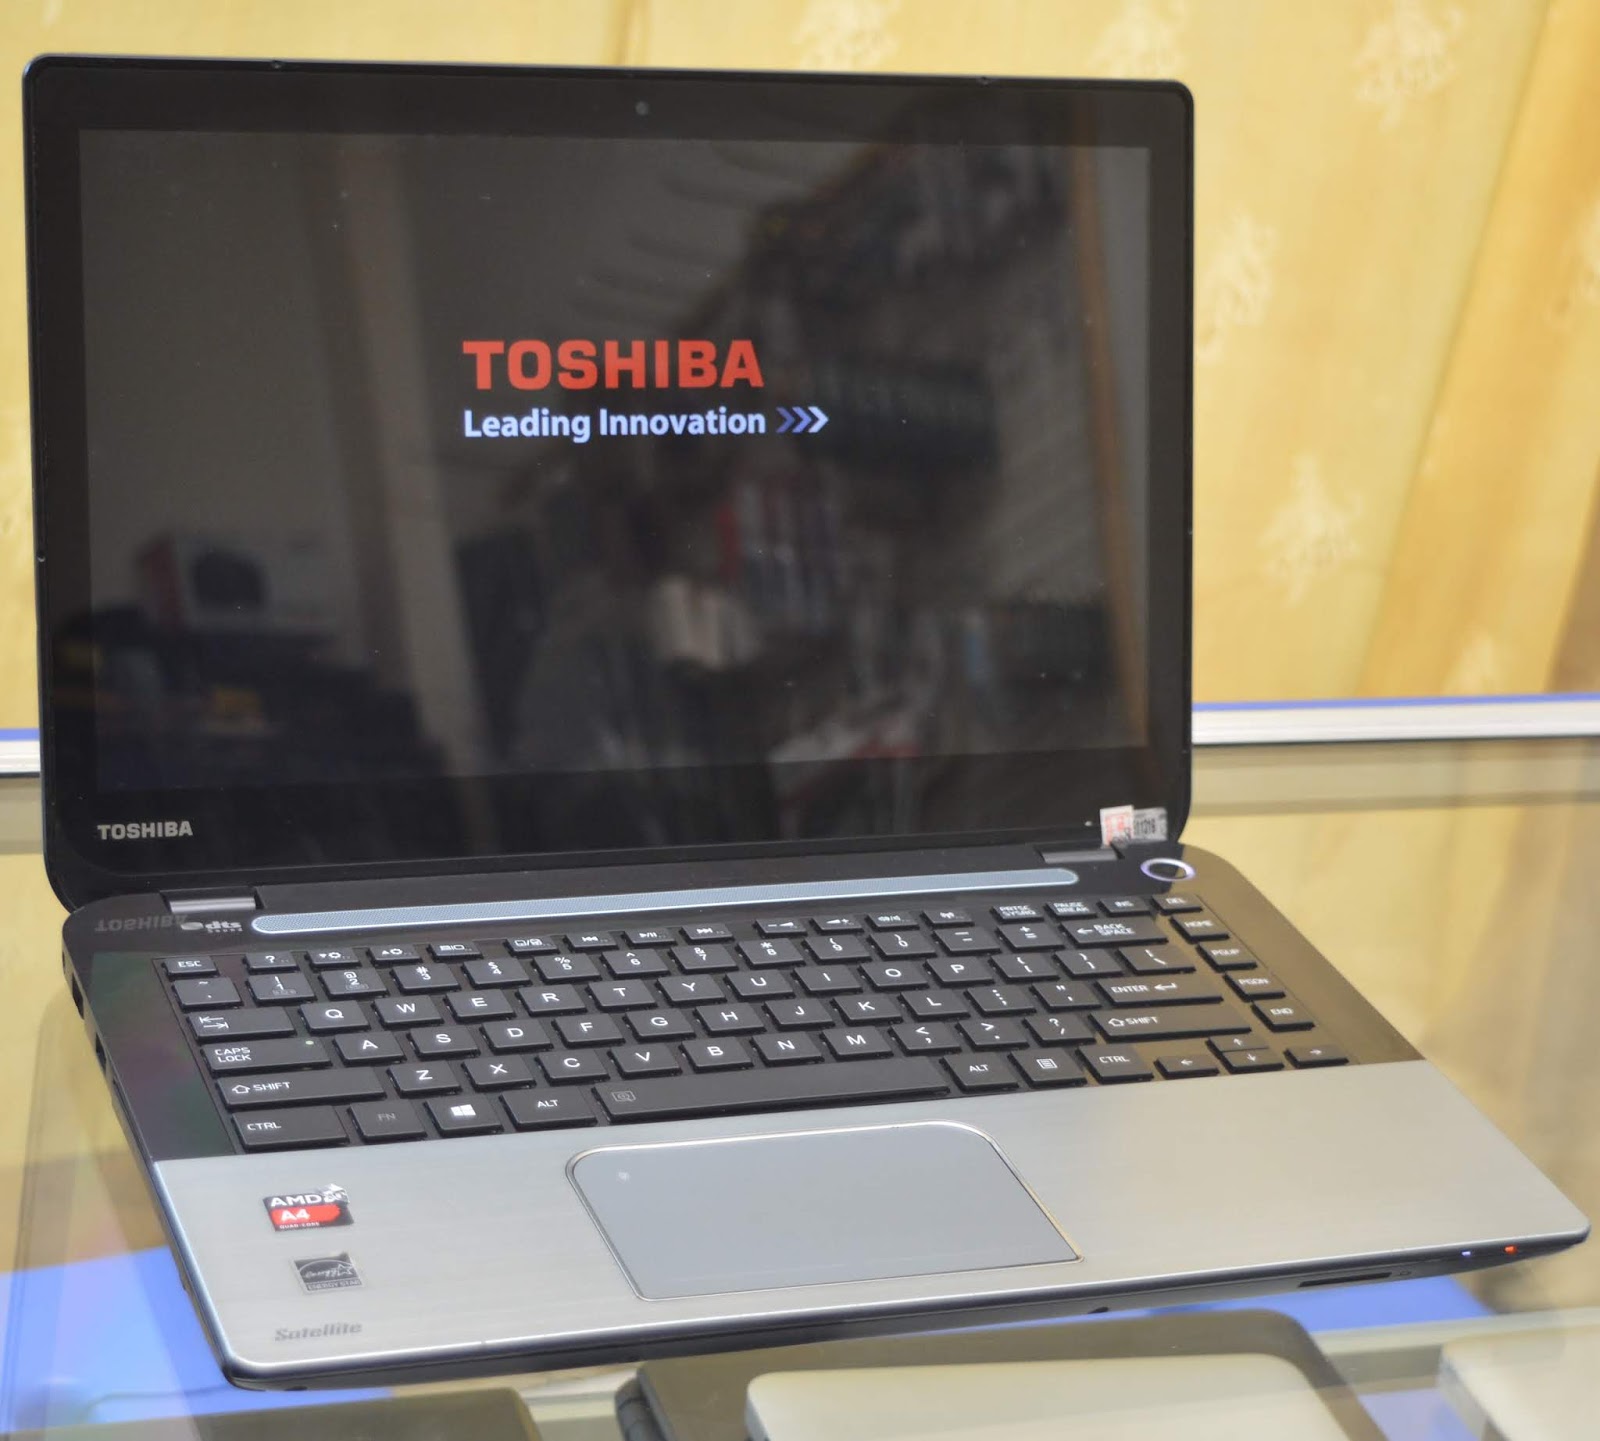 Jual Laptop Toshiba S40DT AMD A4 Second Malang Jual Beli